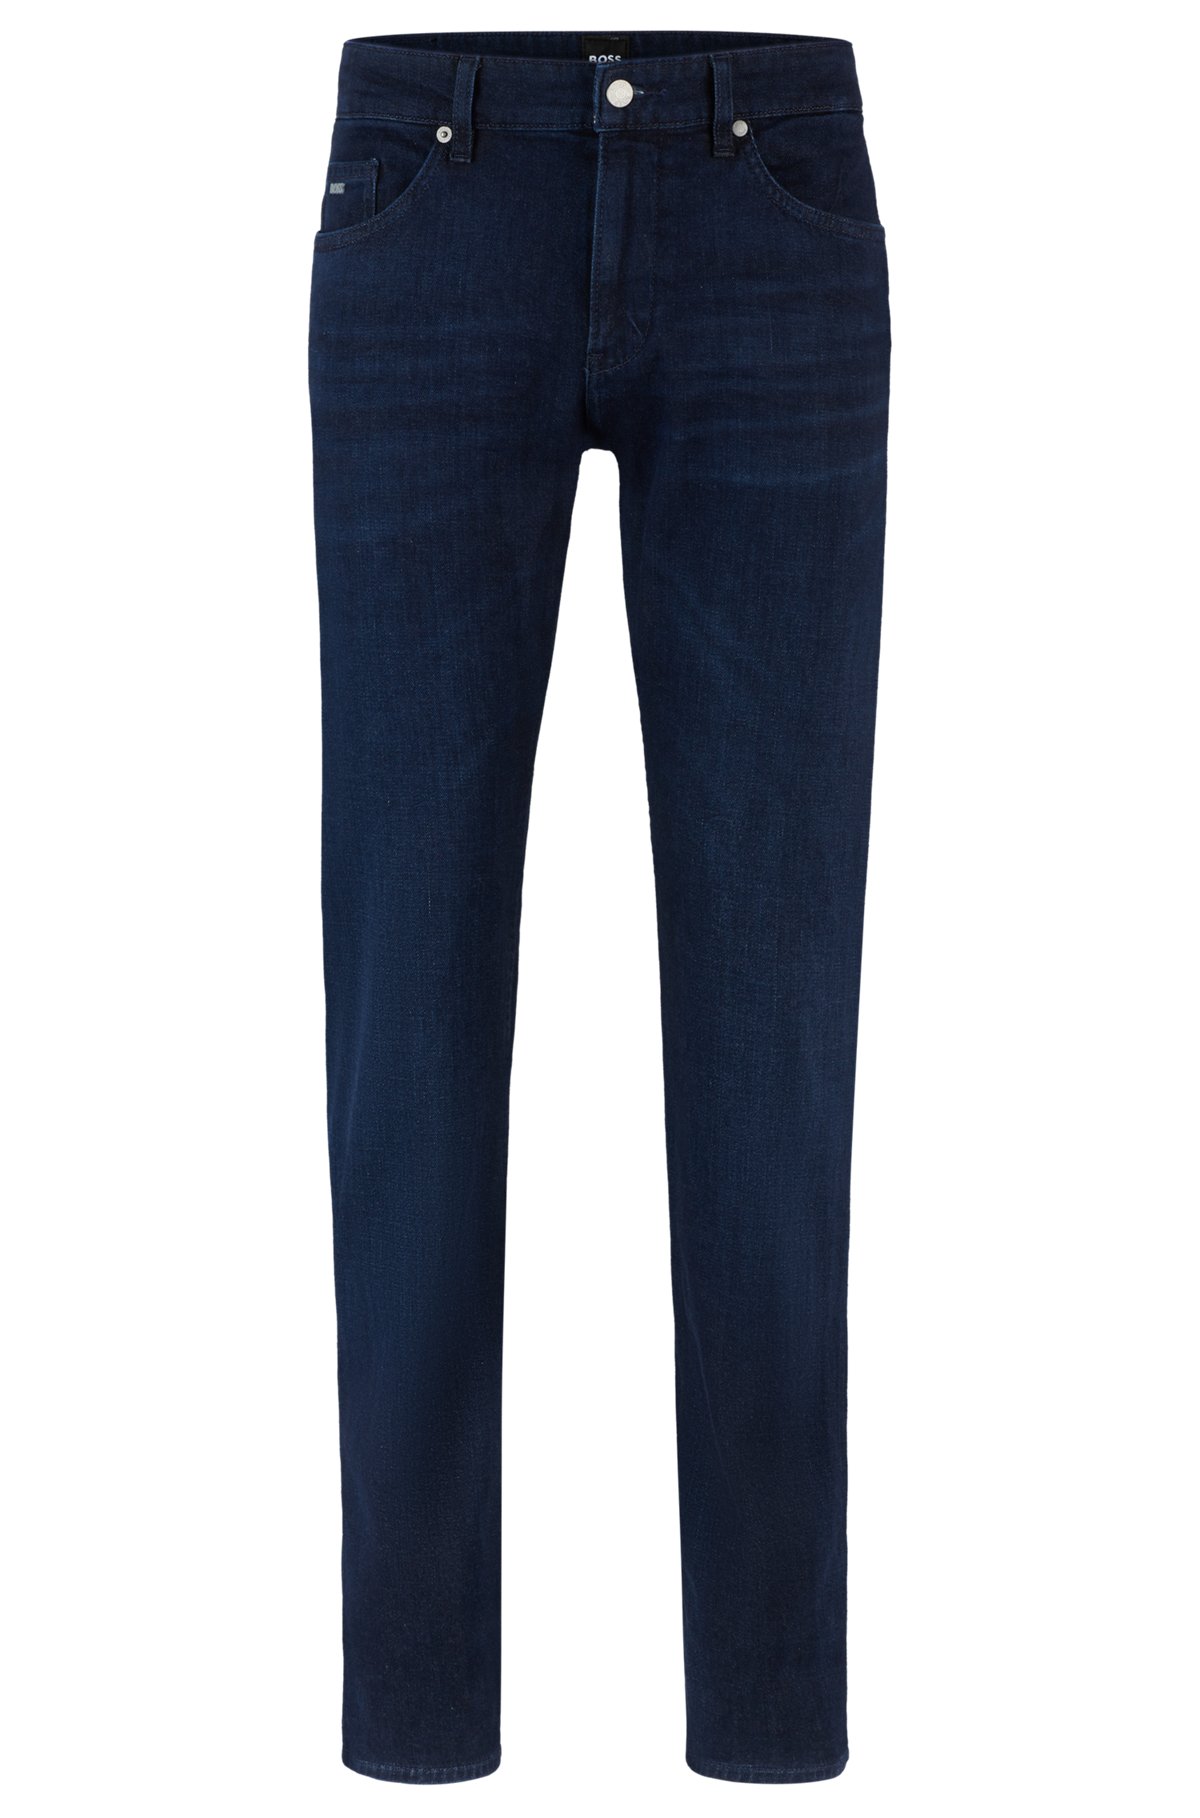 Hugo Boss Delaware 3 Jeans Top Sellers | website.jkuat.ac.ke